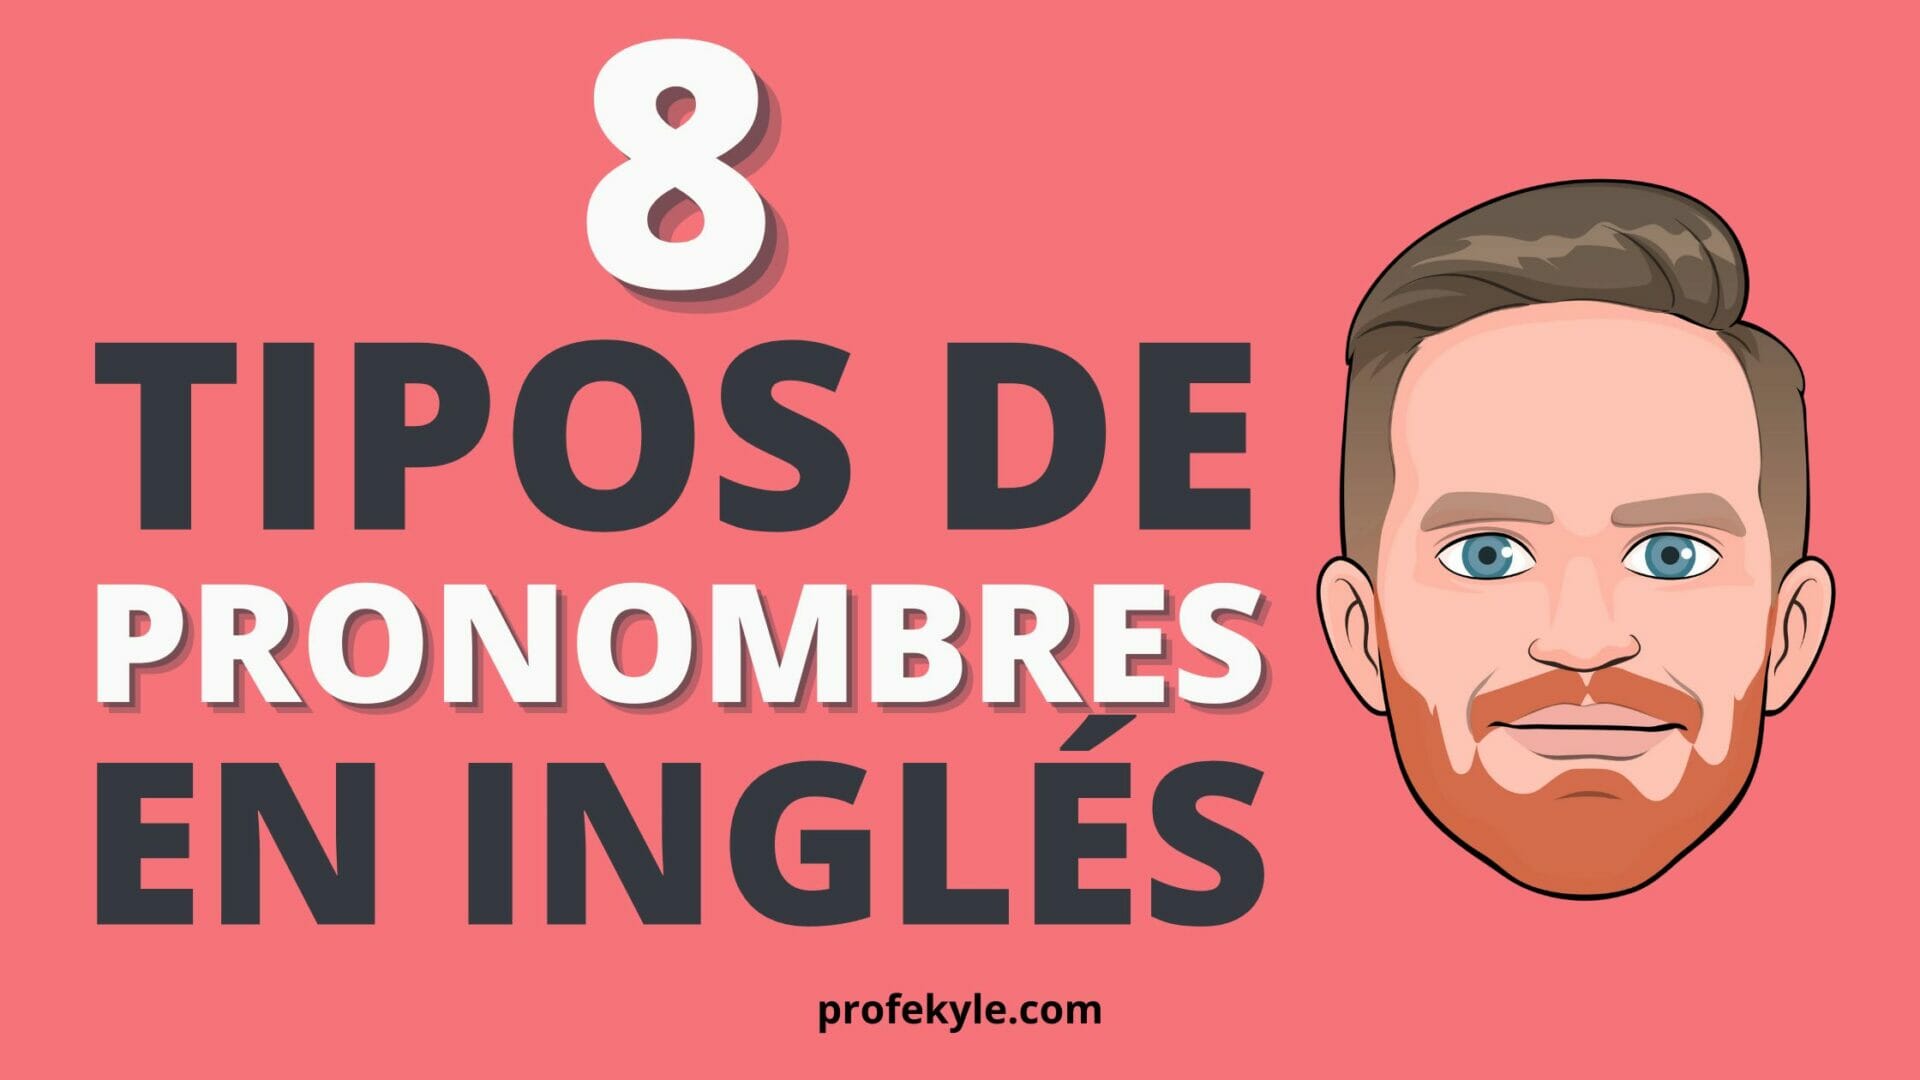 8 tipos de pronombres en ingles imagen